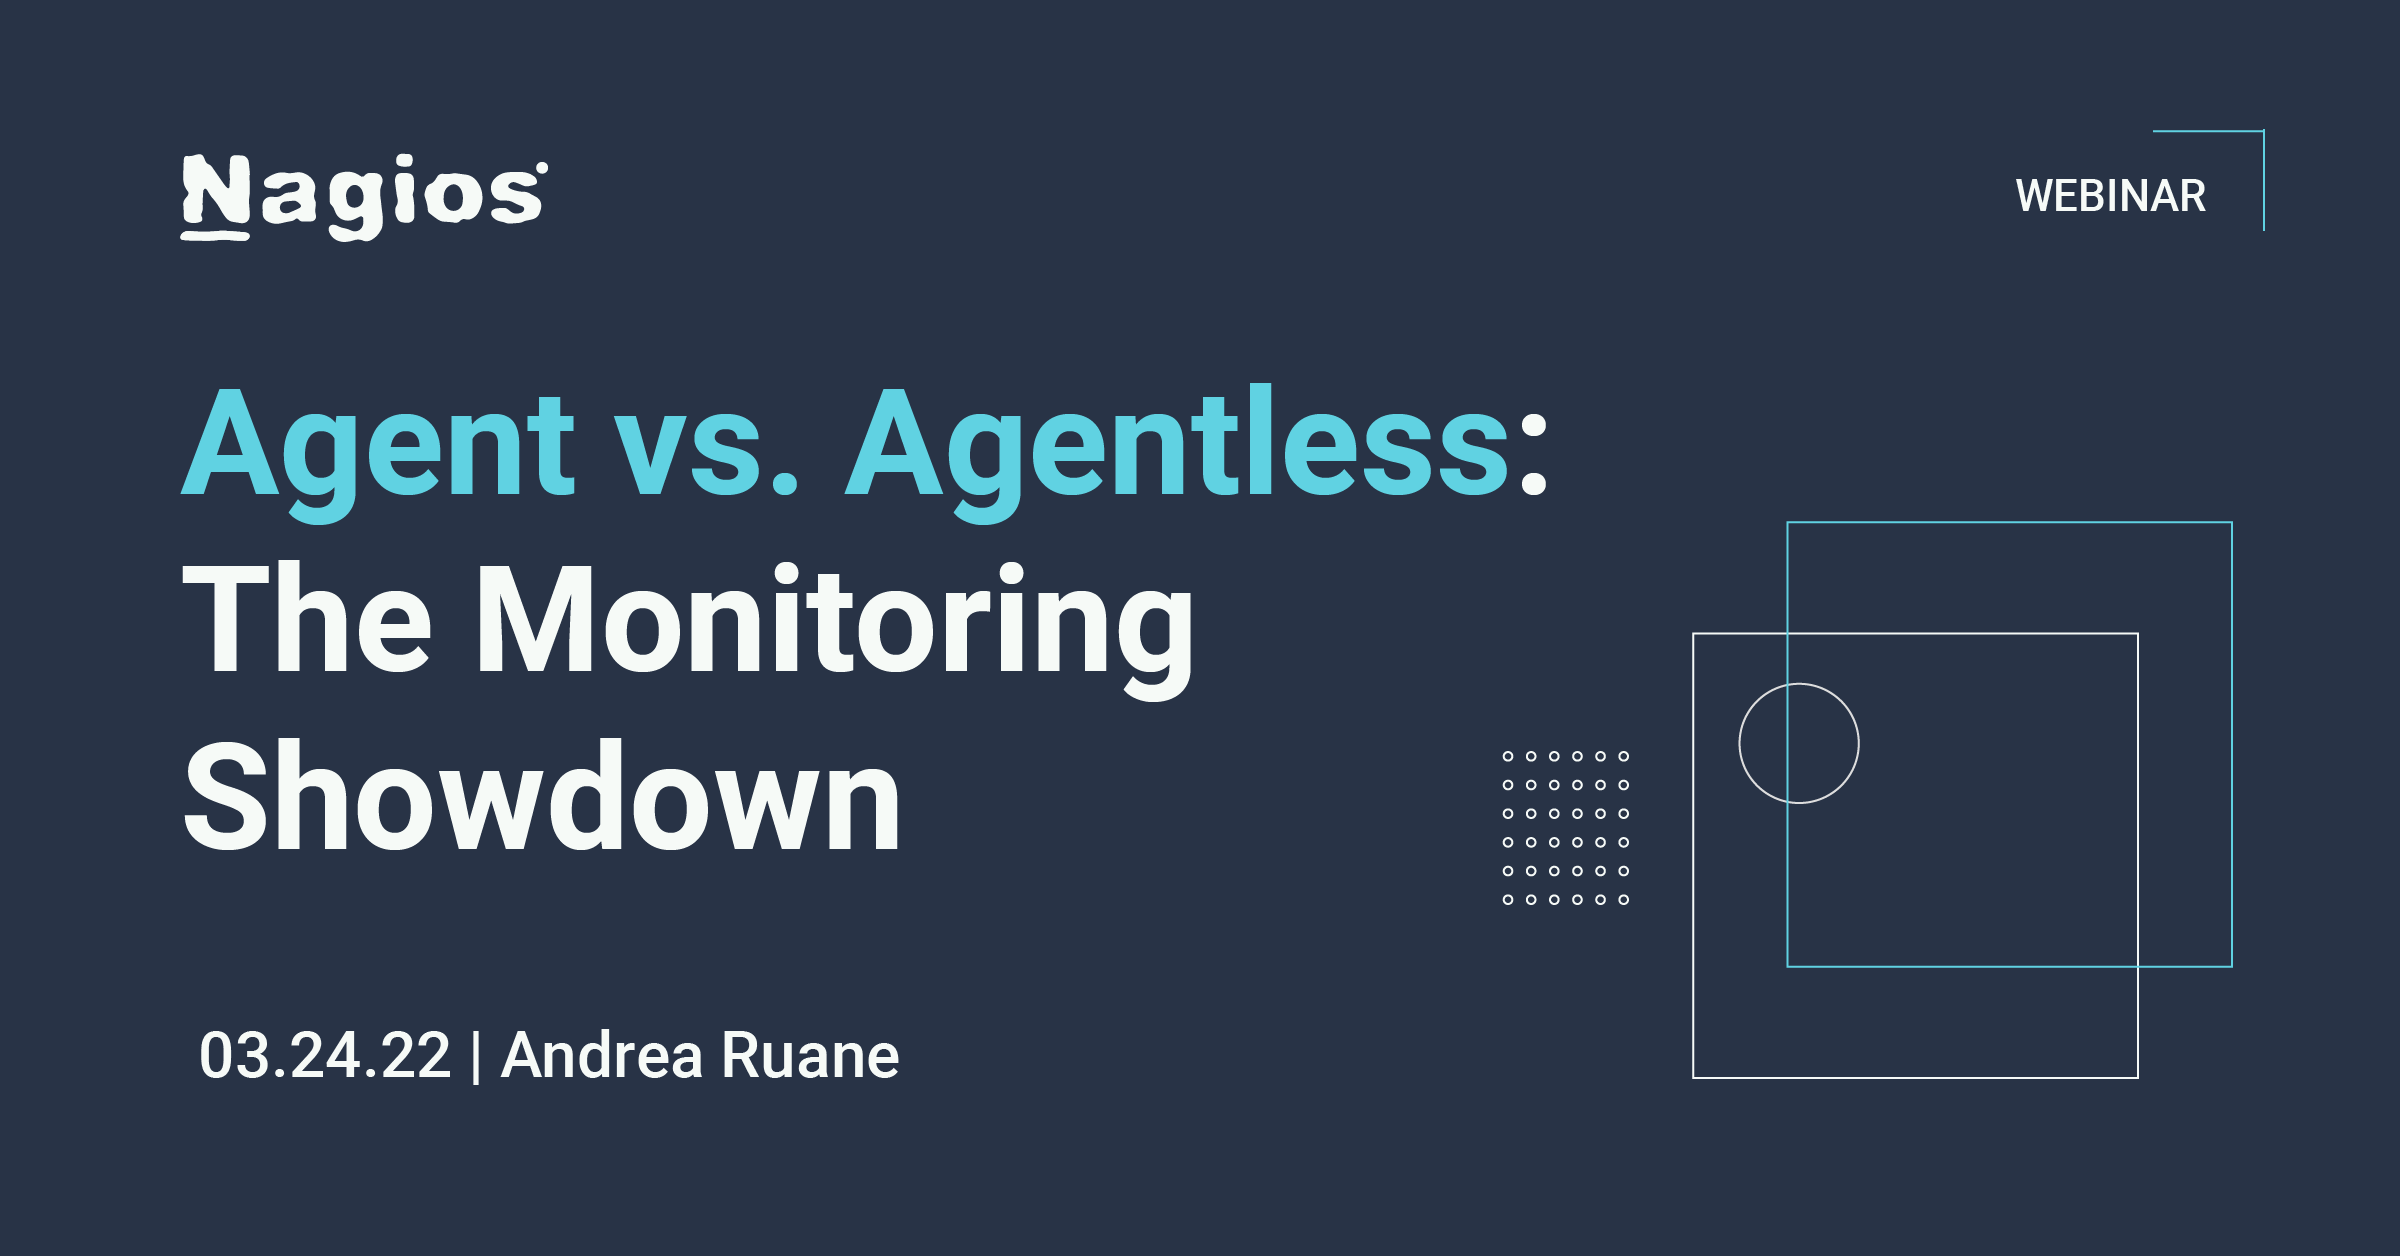 nagios webinar: agent vs. agentless: the monitoring showdown